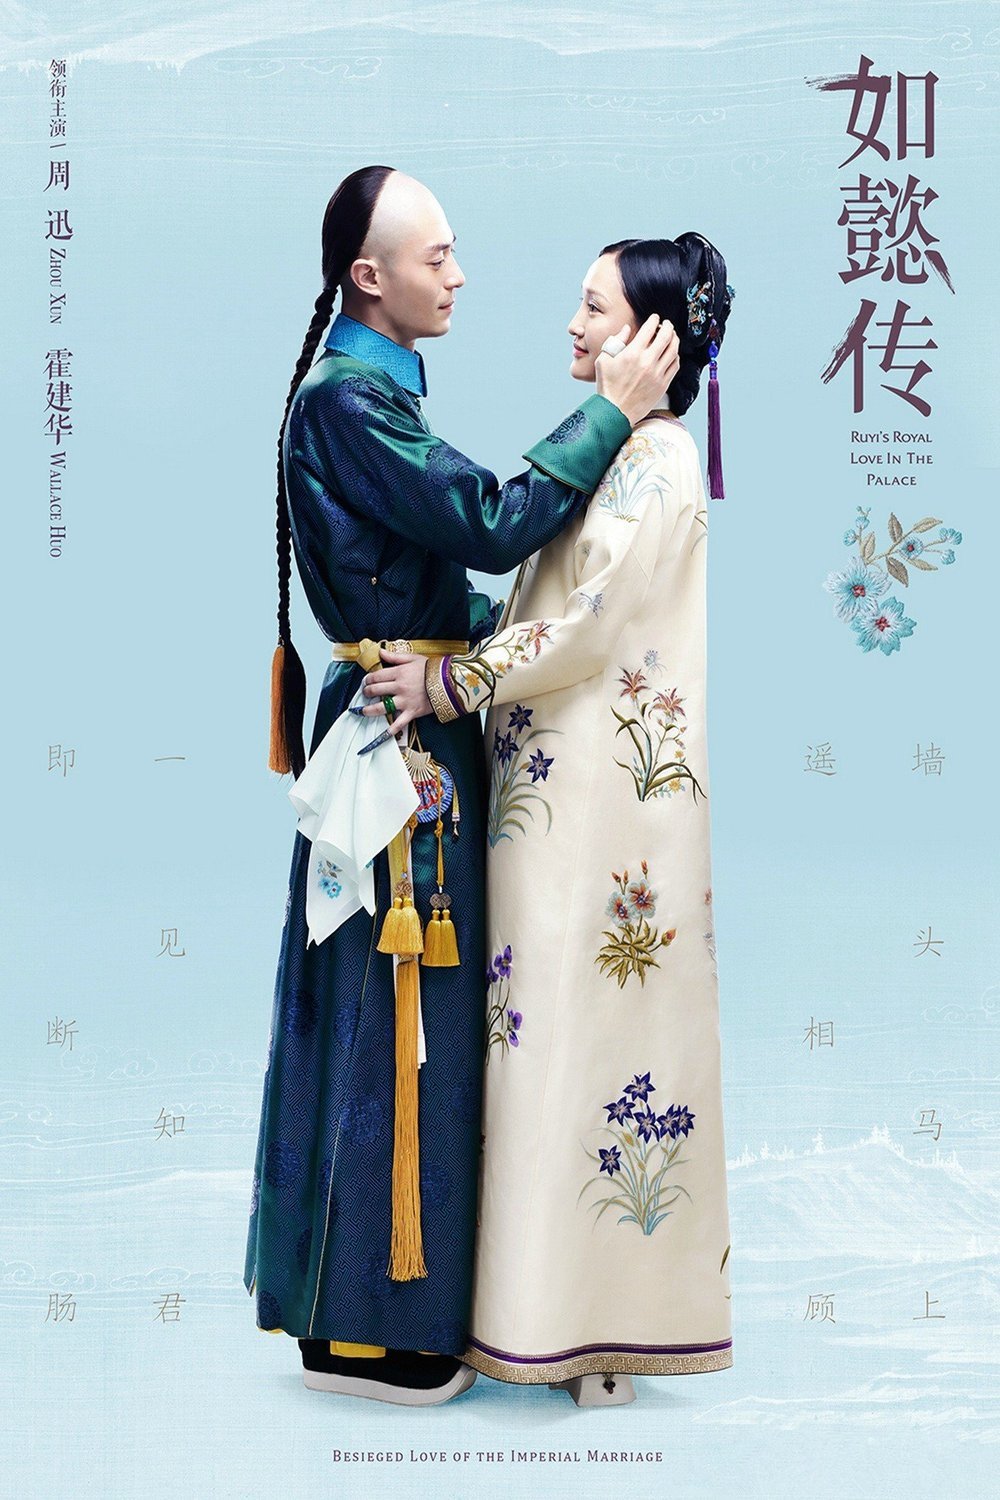 Chinese poster of the movie Ru yi zhuan